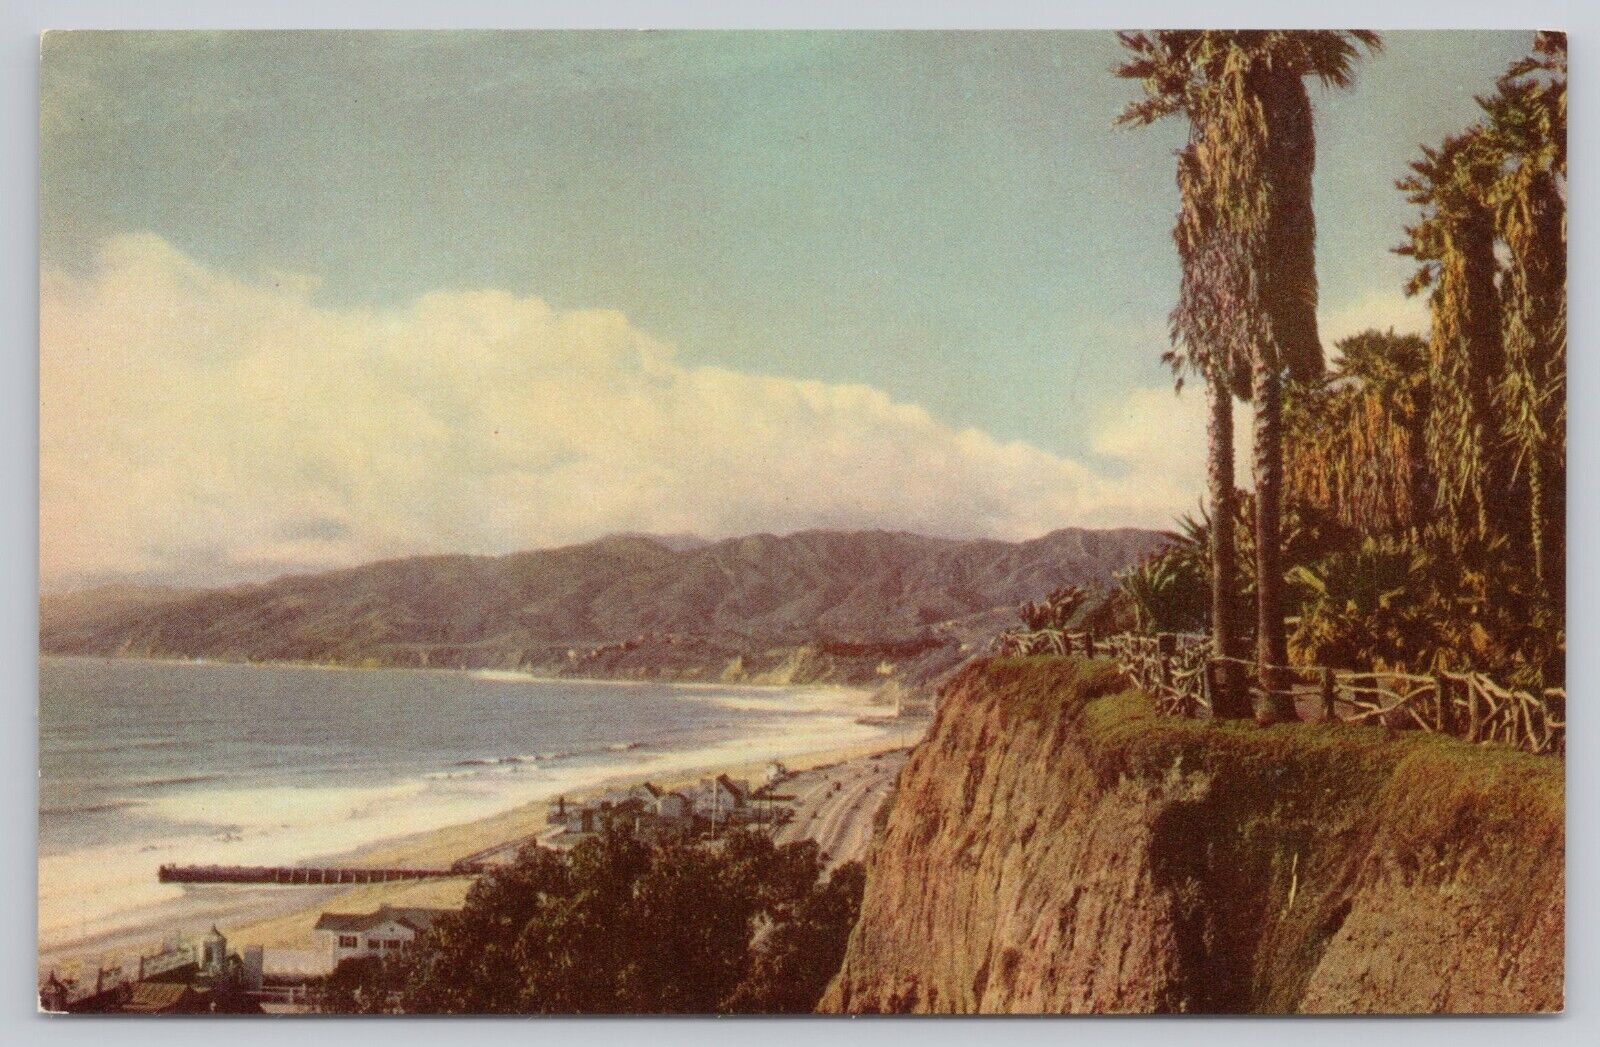 Santa Monica California, Palisades Highway Alternate 101 Beach, Vintage Postcard